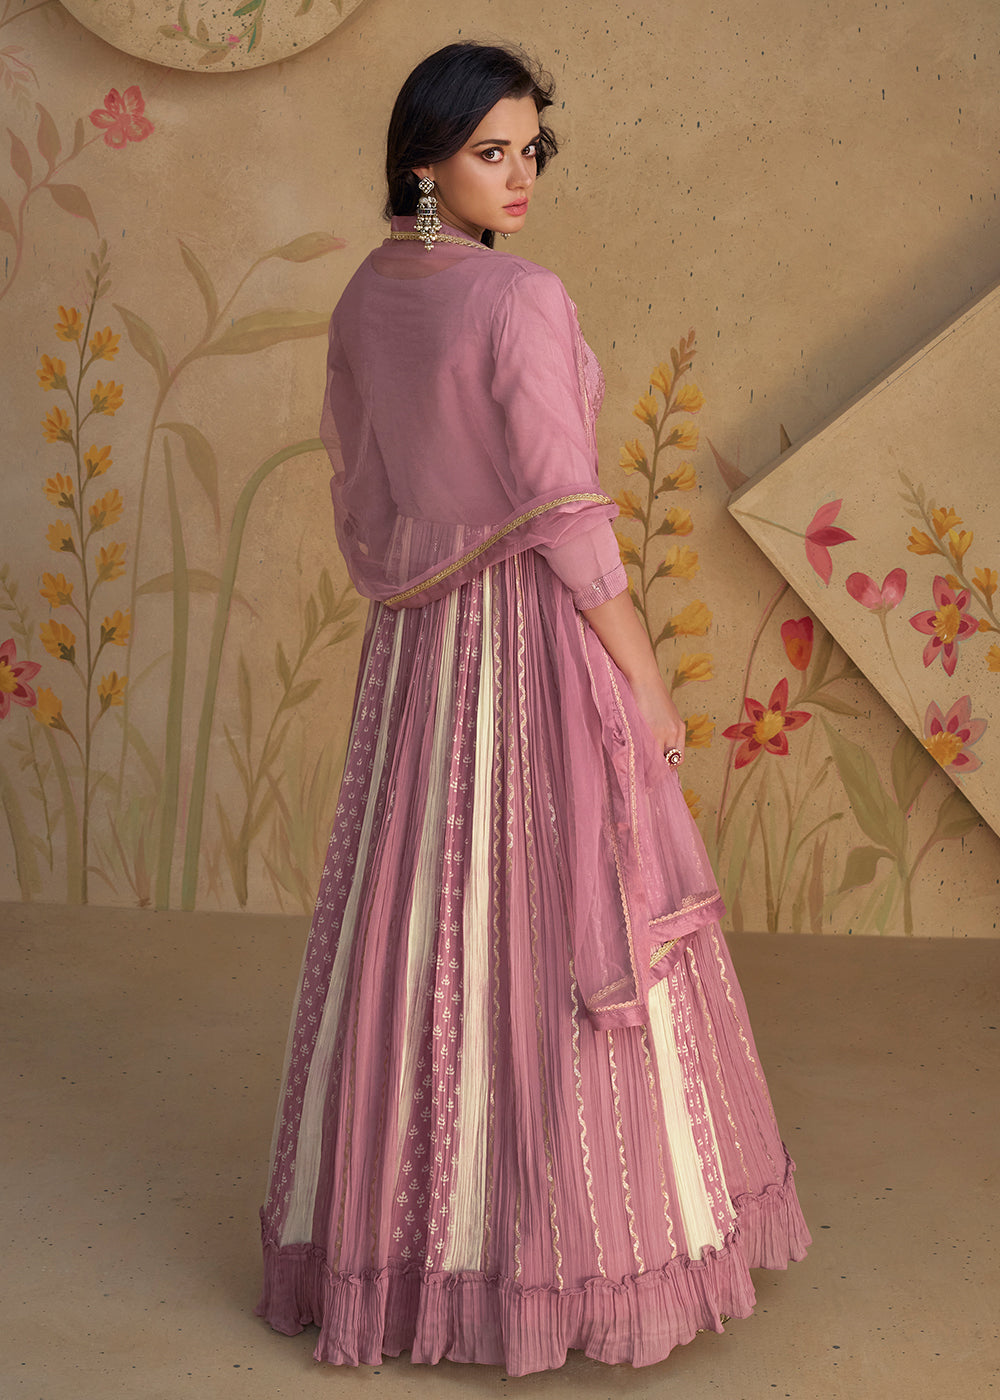 Buy Now Mauve Pink Sequins & Thread Wedding Festive Anarkali Dress Online in USA, UK, Australia, New Zealand, Canada & Worldwide at Empress Clothing.